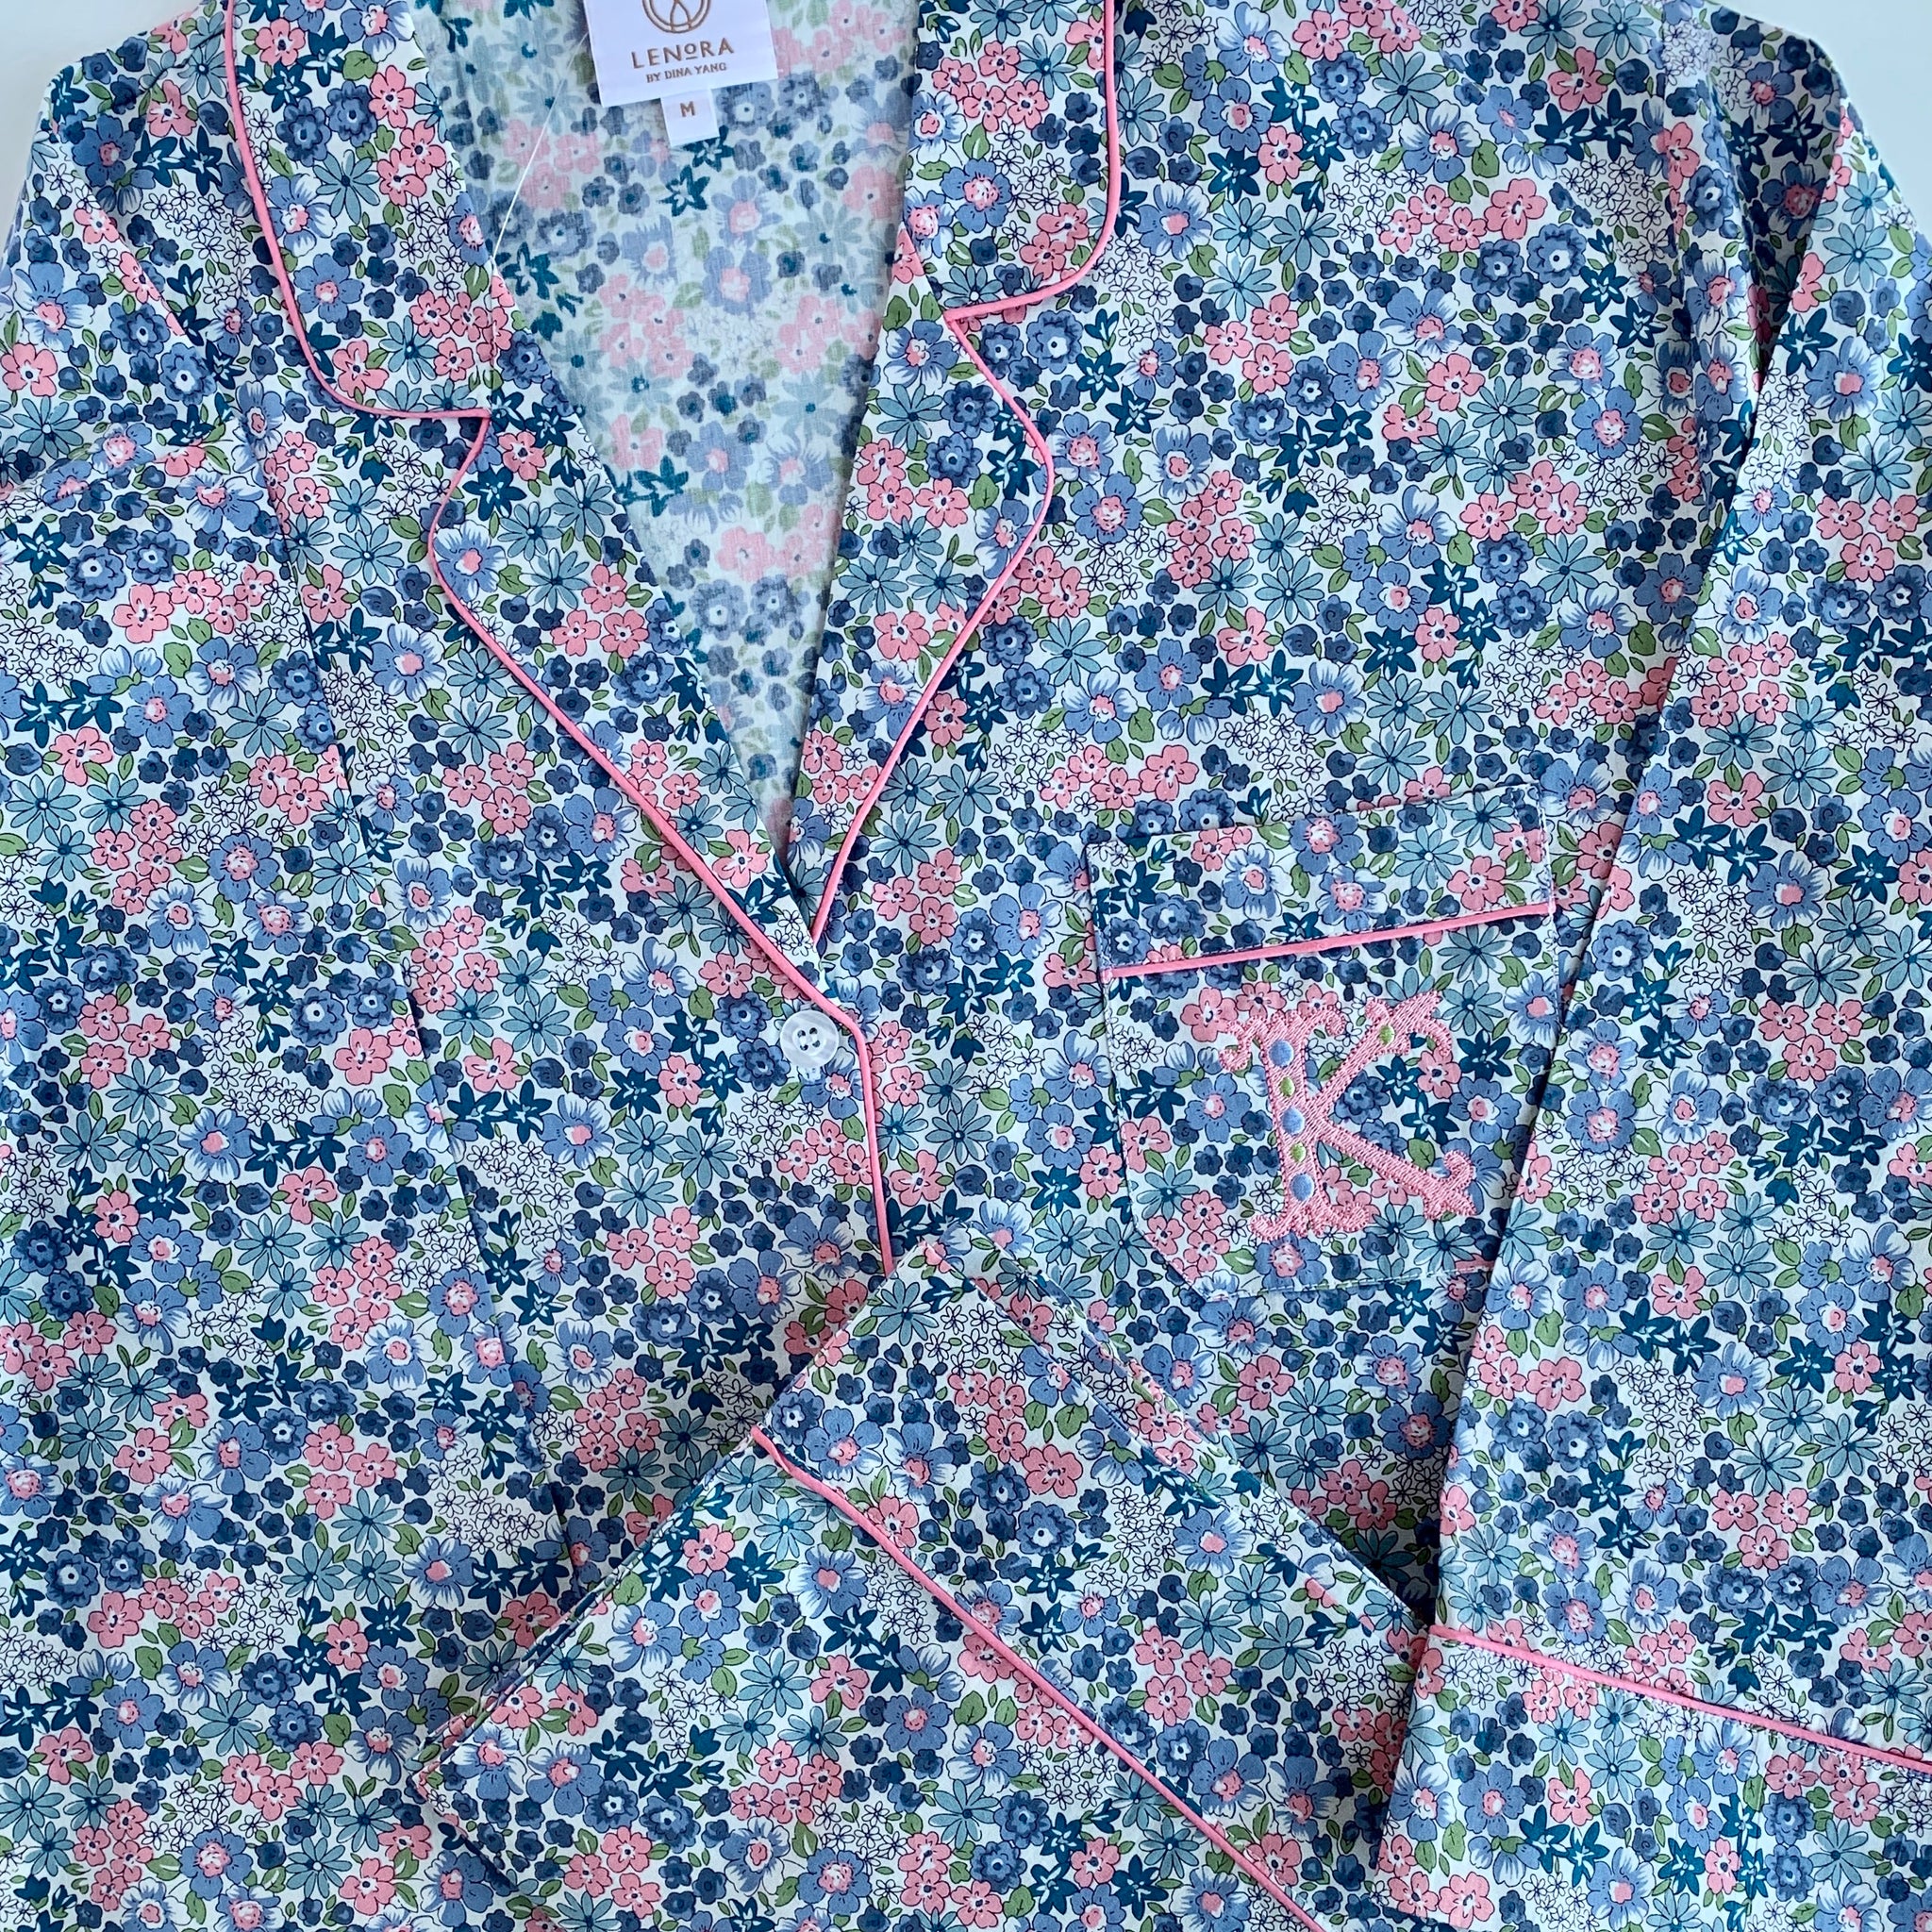 Blueberry Floral Classic Pajama Set